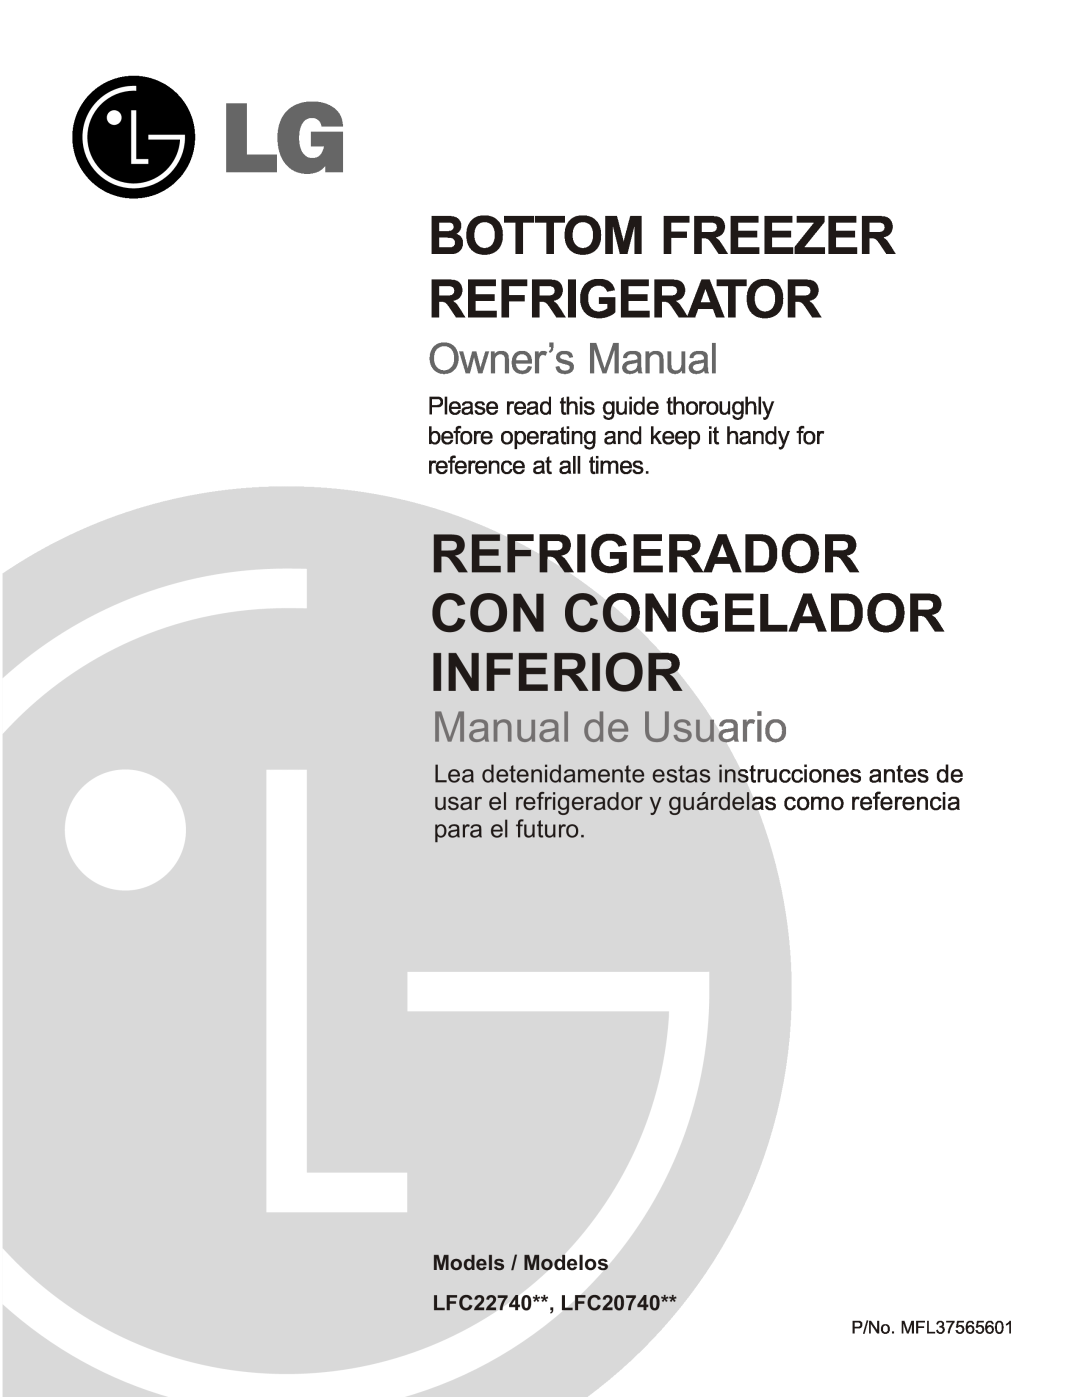 LG Electronics owner manual Models / Modelos LFC22740**, LFC20740, Bottom Freezer Refrigerator, Manual de Usuario 